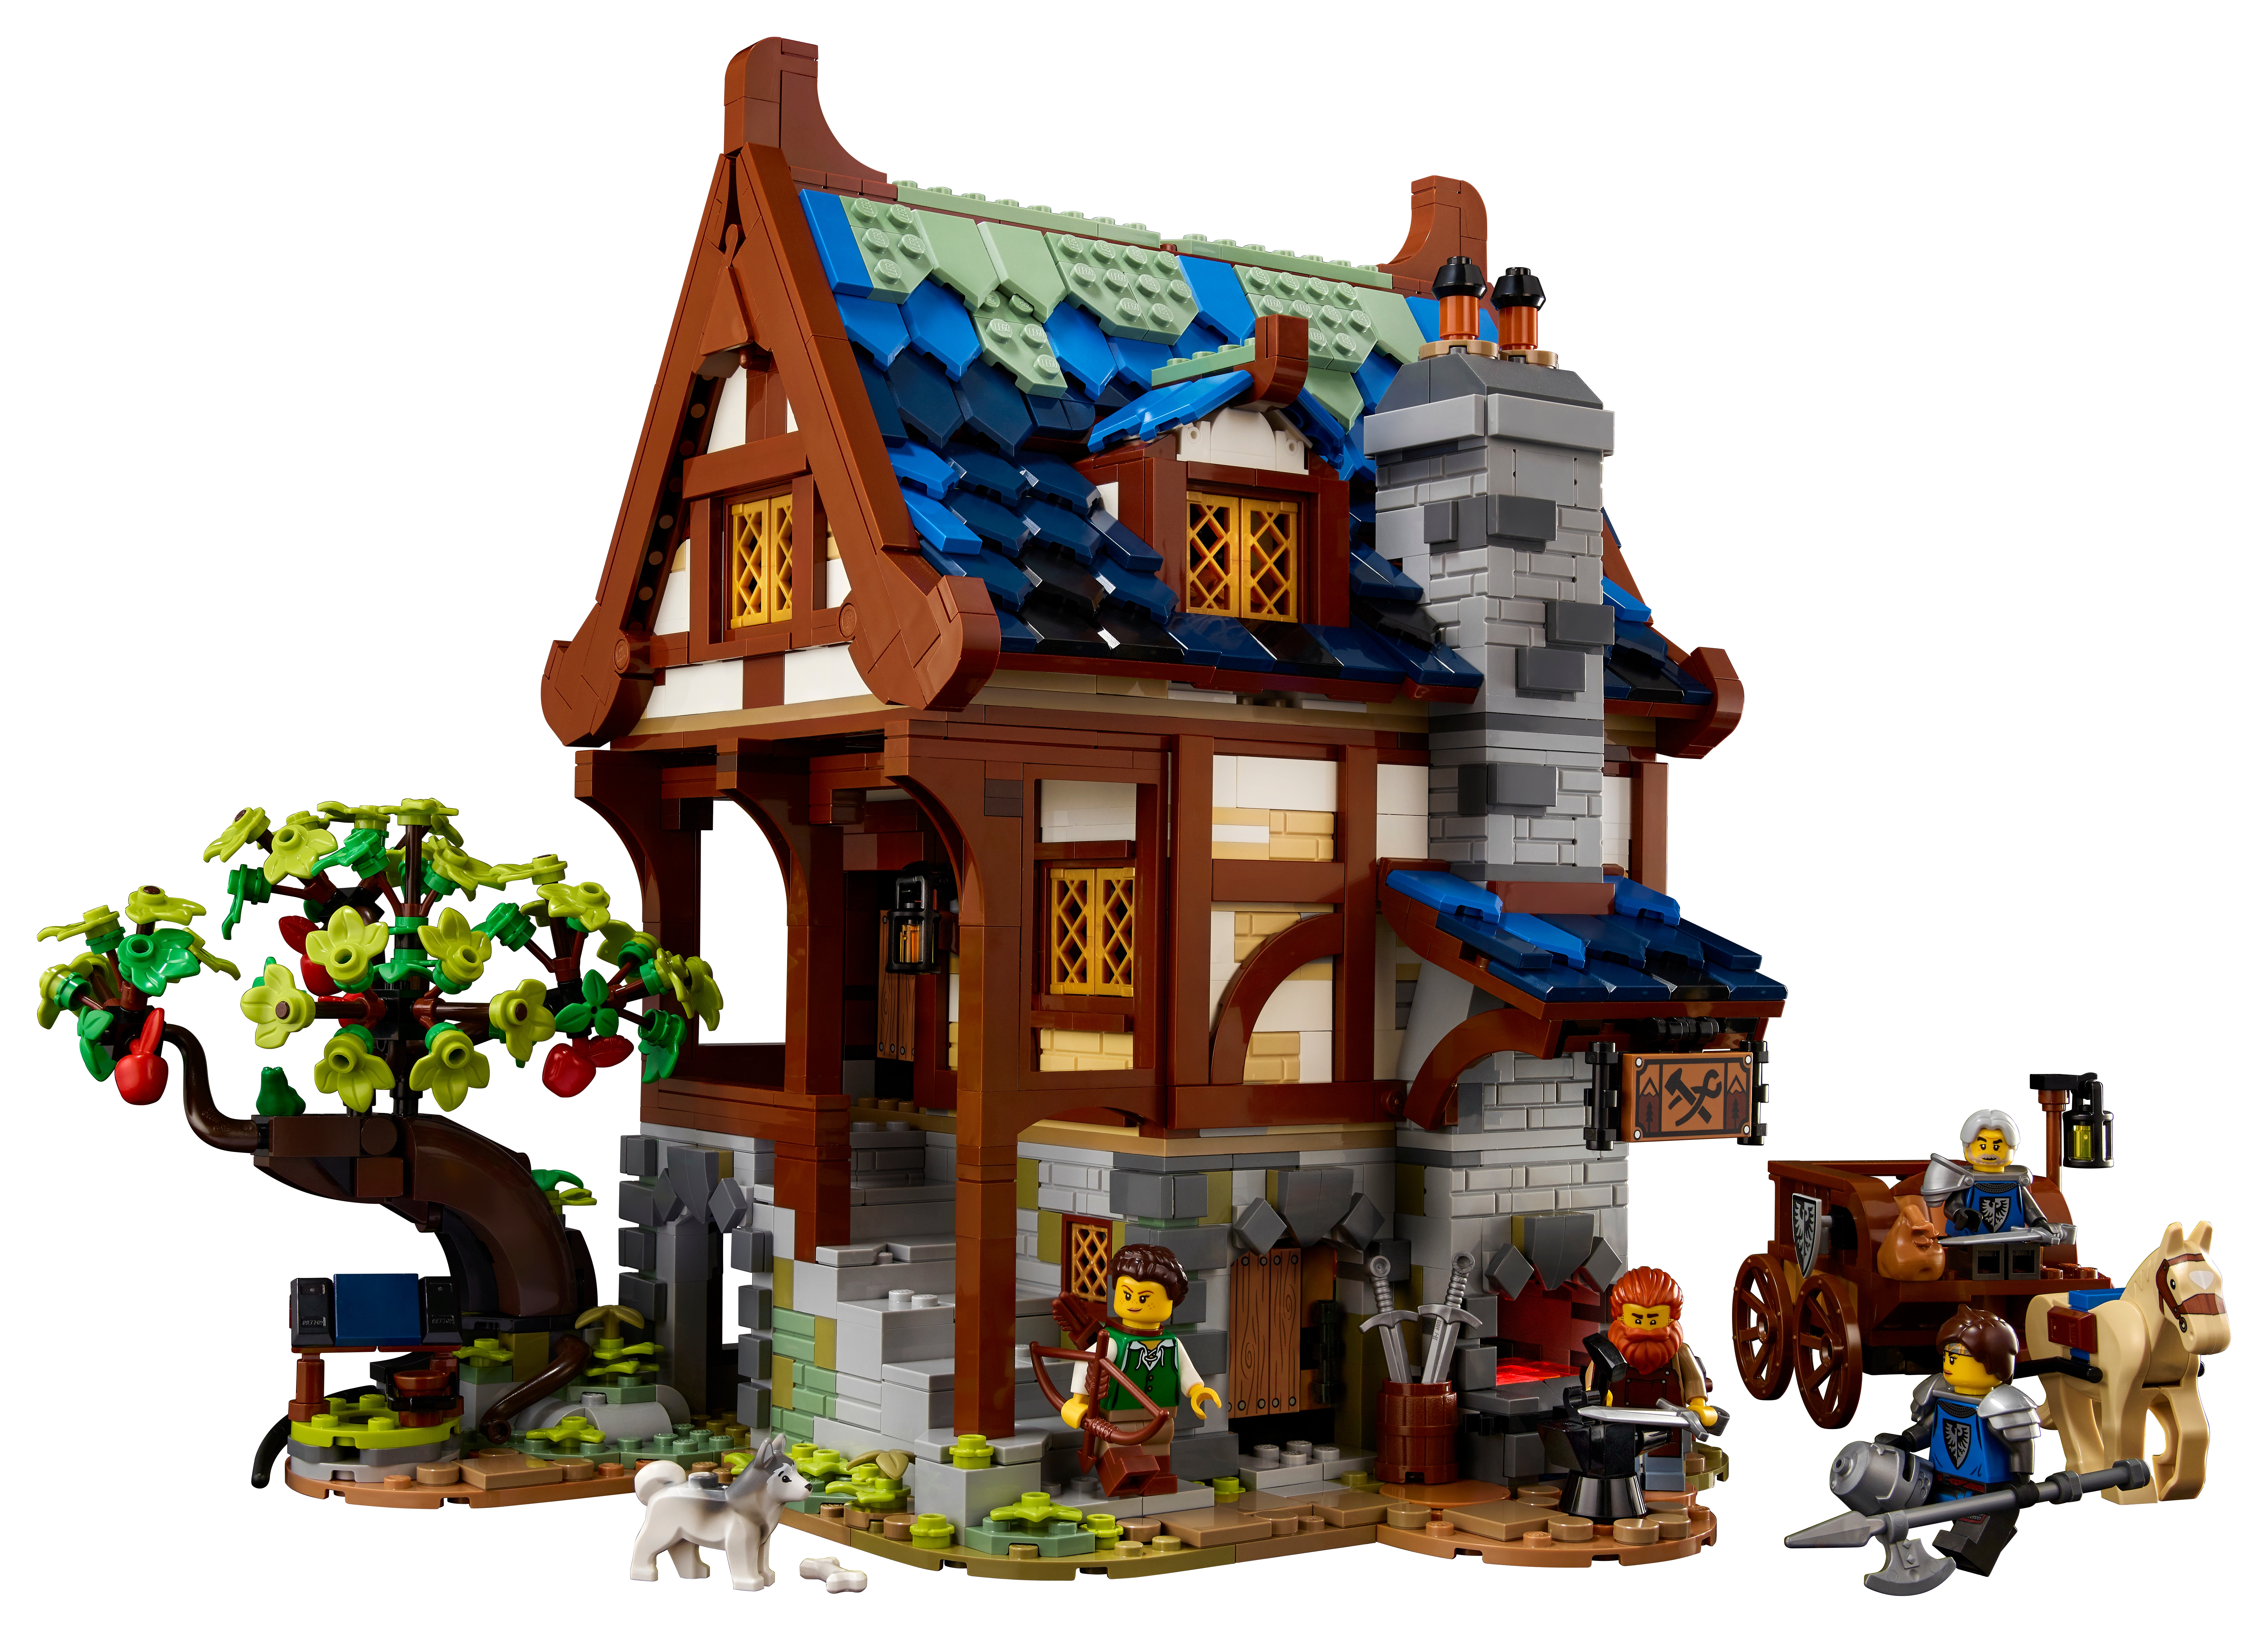 LEGO Ideas Pick a Brick minifigure display sets revealed